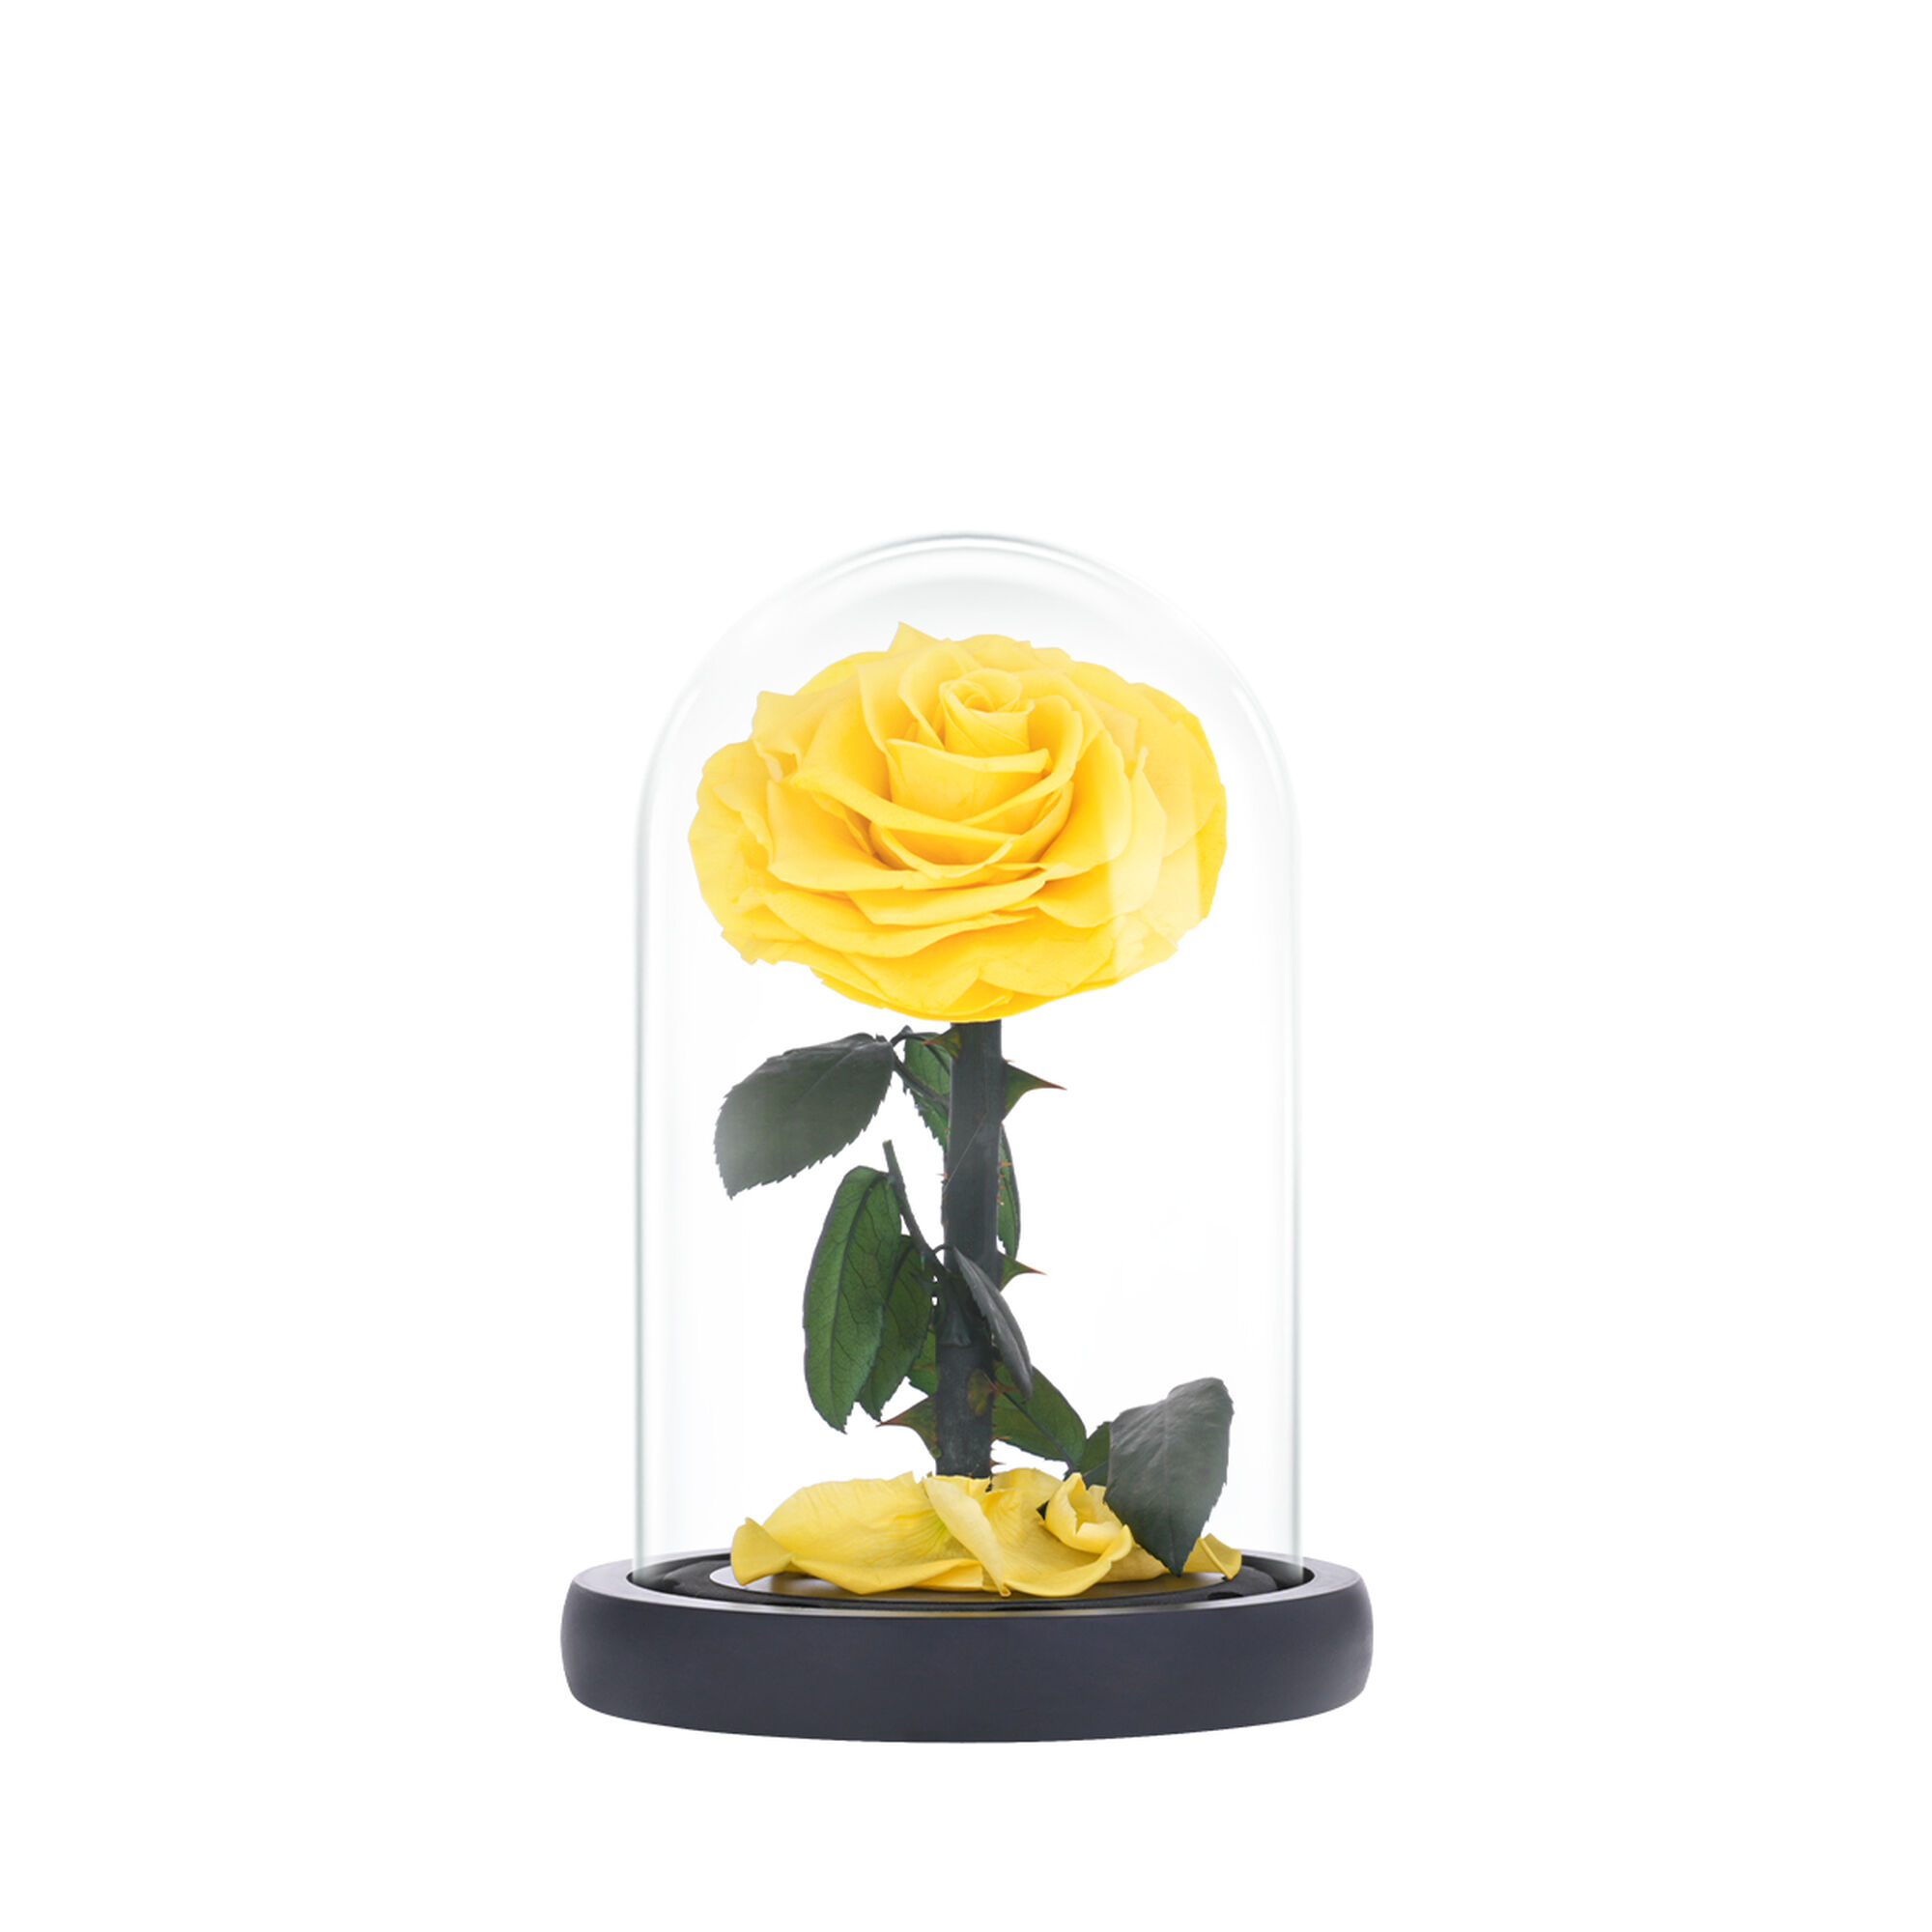 Small yellow everlasting natural roses